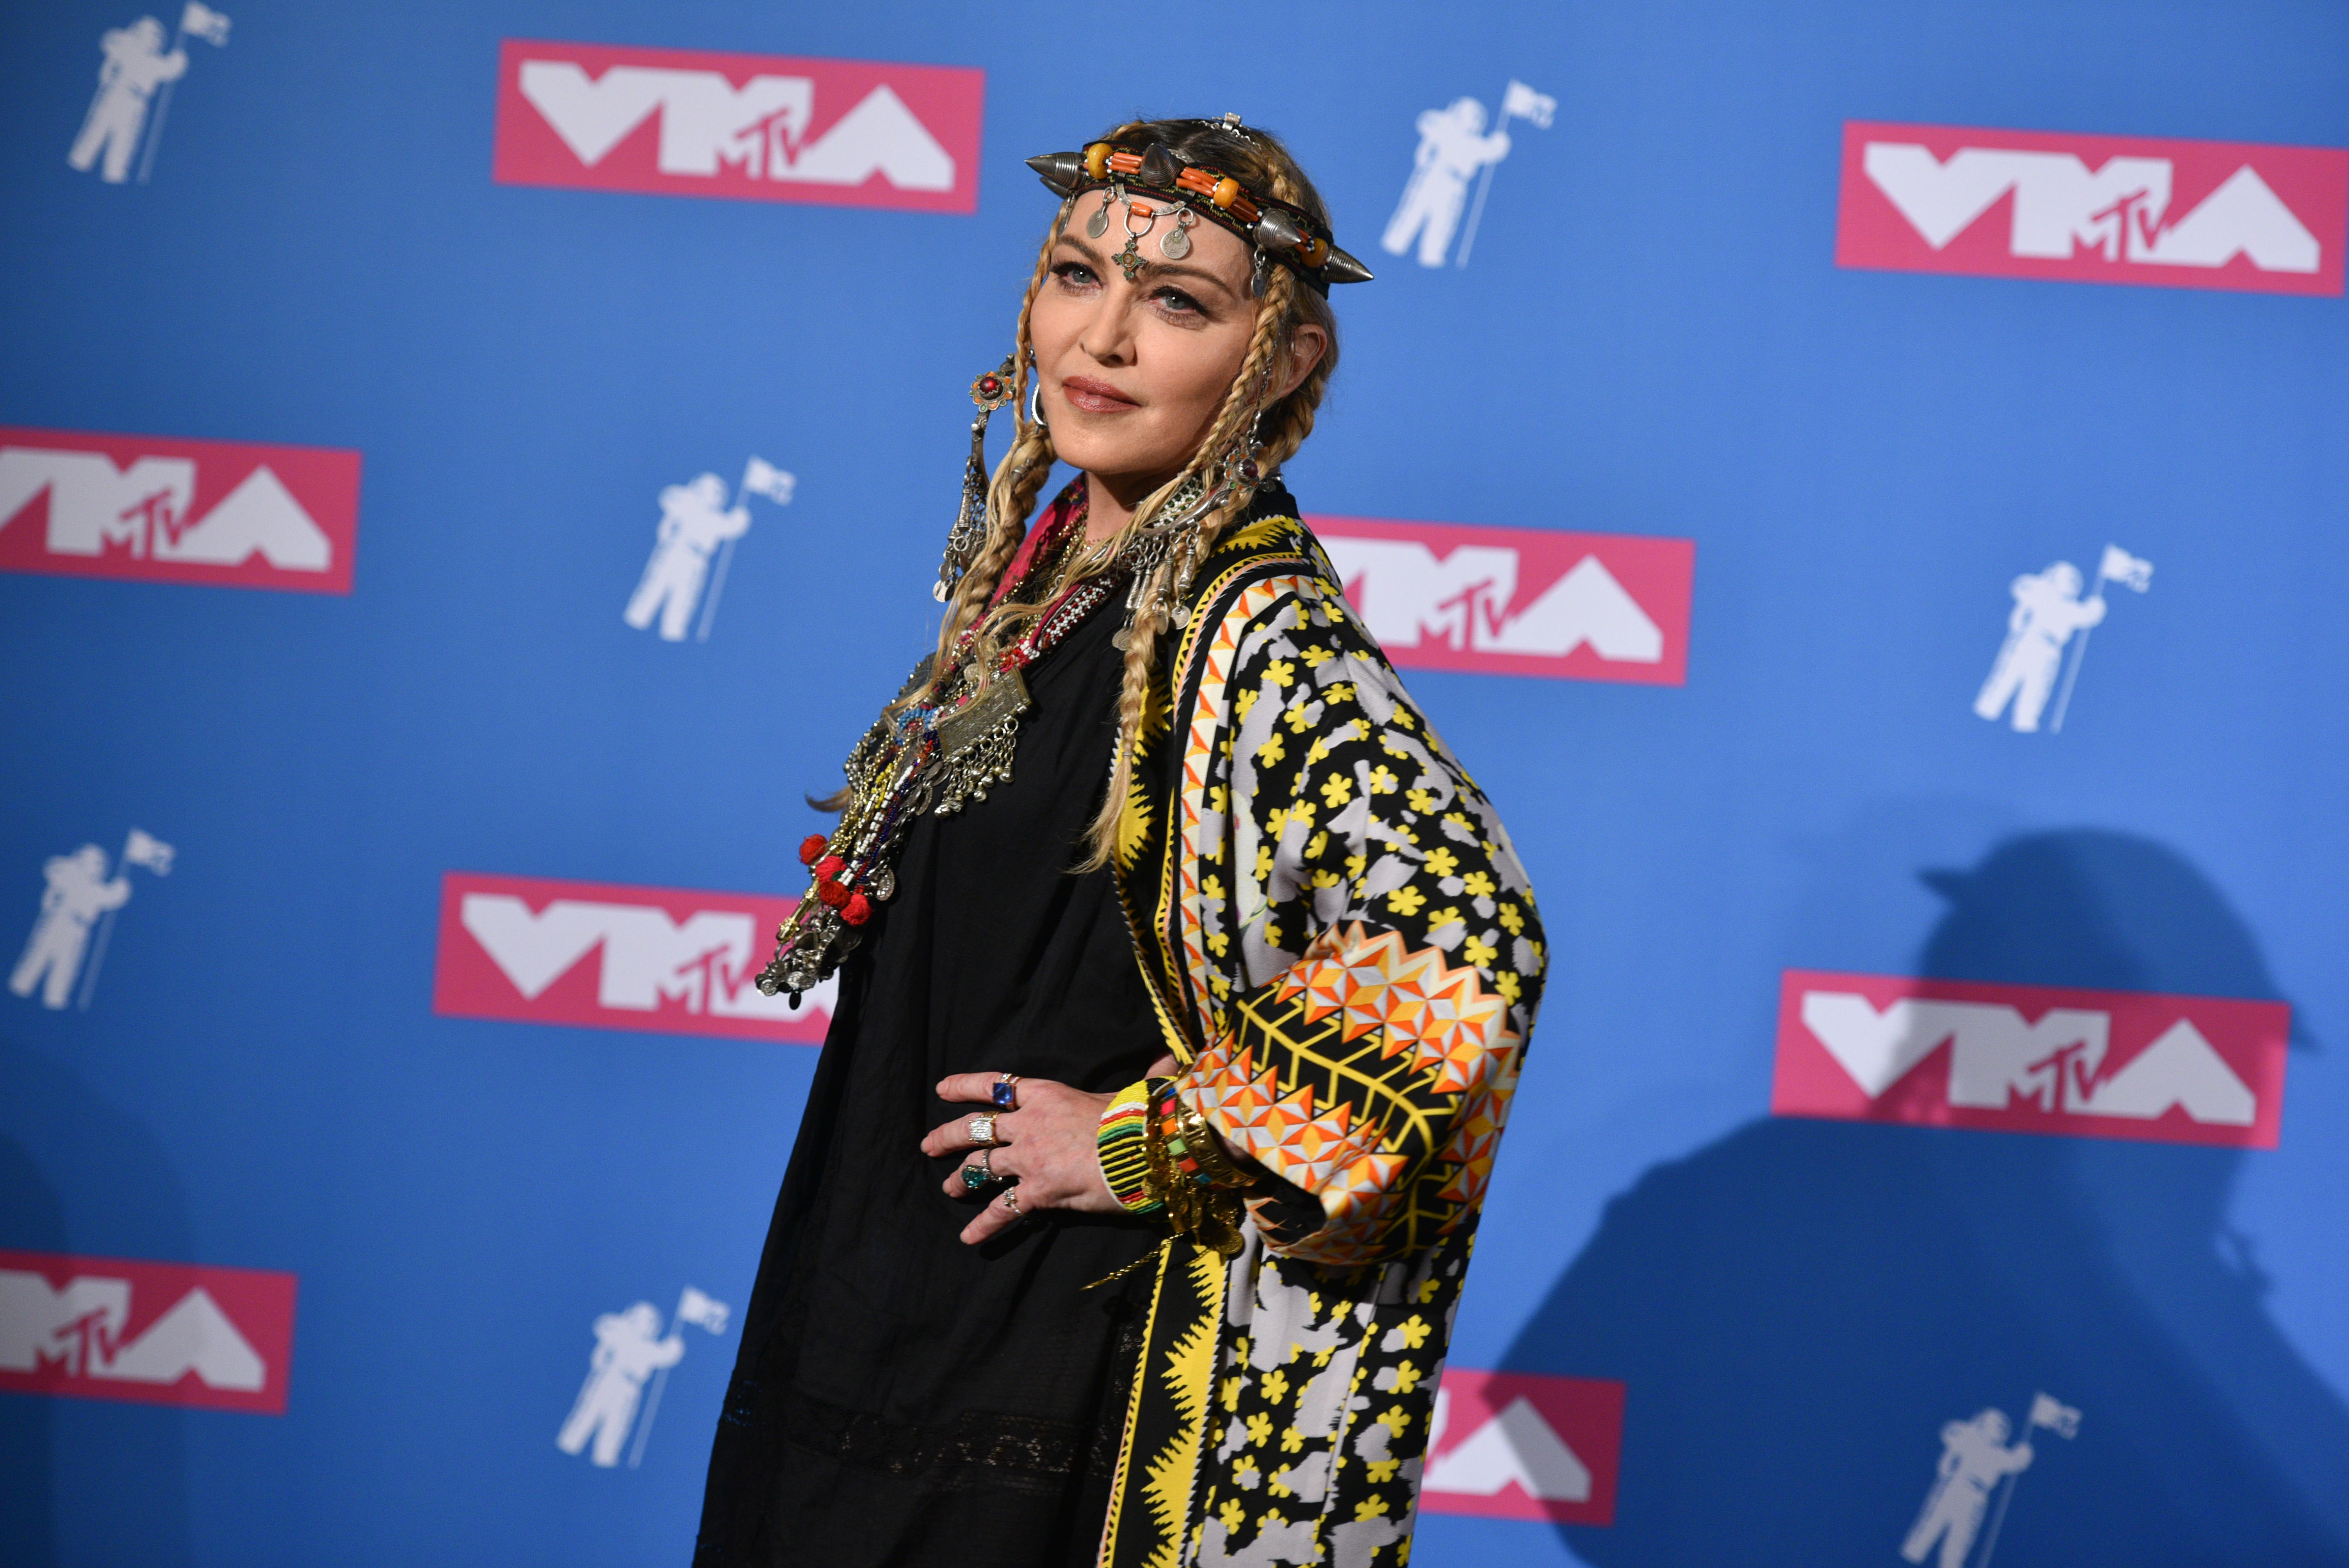 Madonna, Berberkleid, Berber, Bekleidung, MTV Video Music Awards, Uli Rohde, Aktivistin, Bergedorferin, Berber-Bekleidung, Berbermode, kabylisches Kleid, Kabylen, News, Bergedorfer Blog, HEIDI VOM LANDE